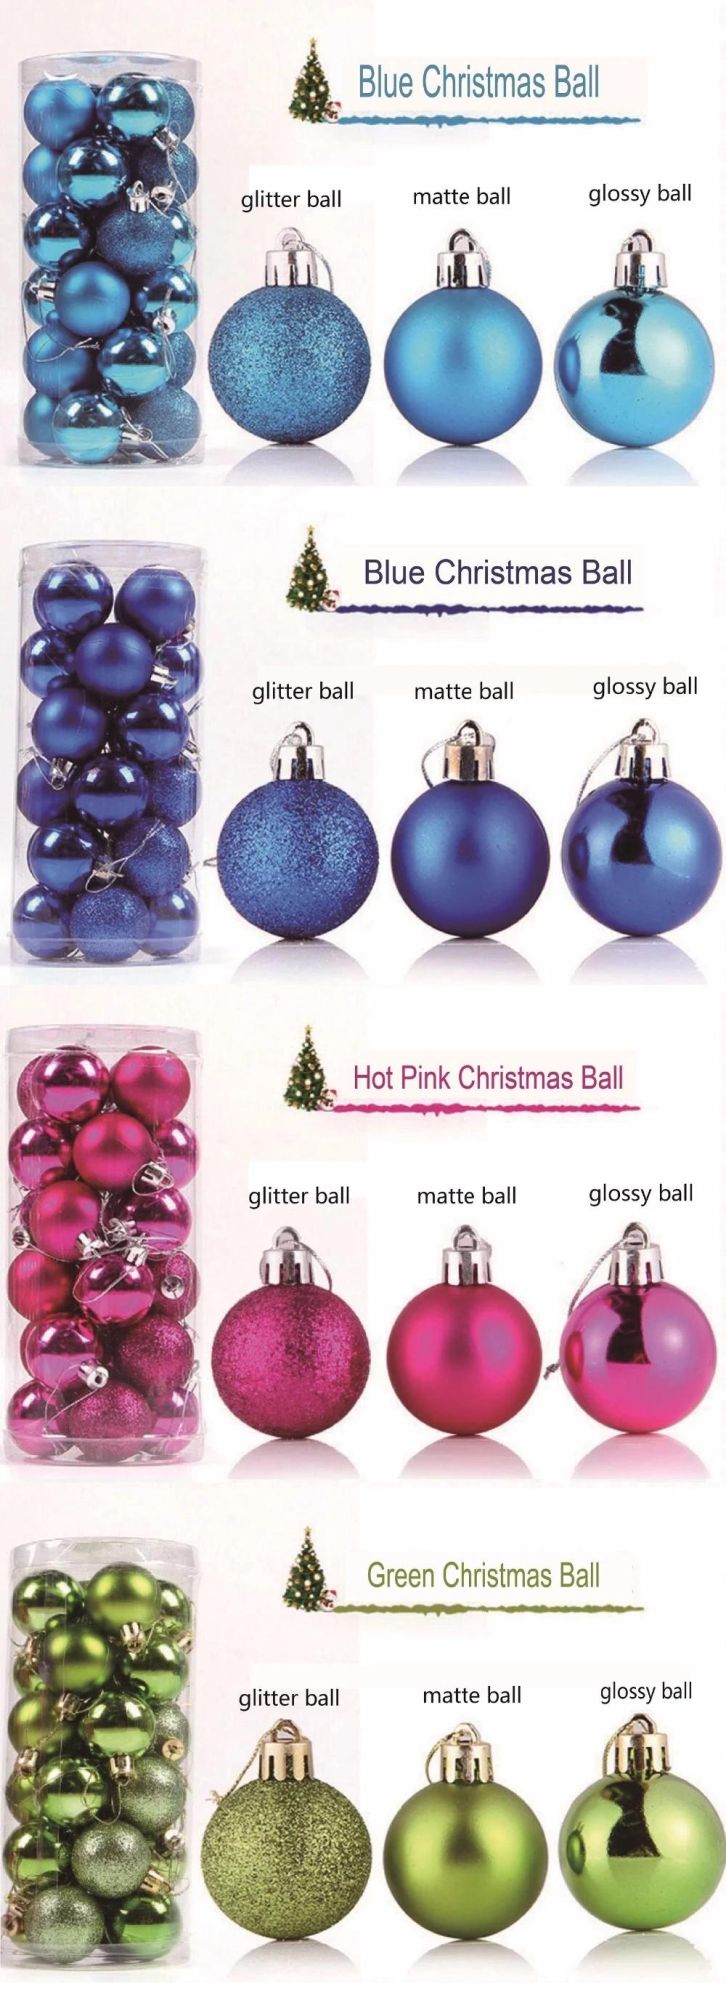 Decorating Red Merry Glass Christmas/Xmas Balls